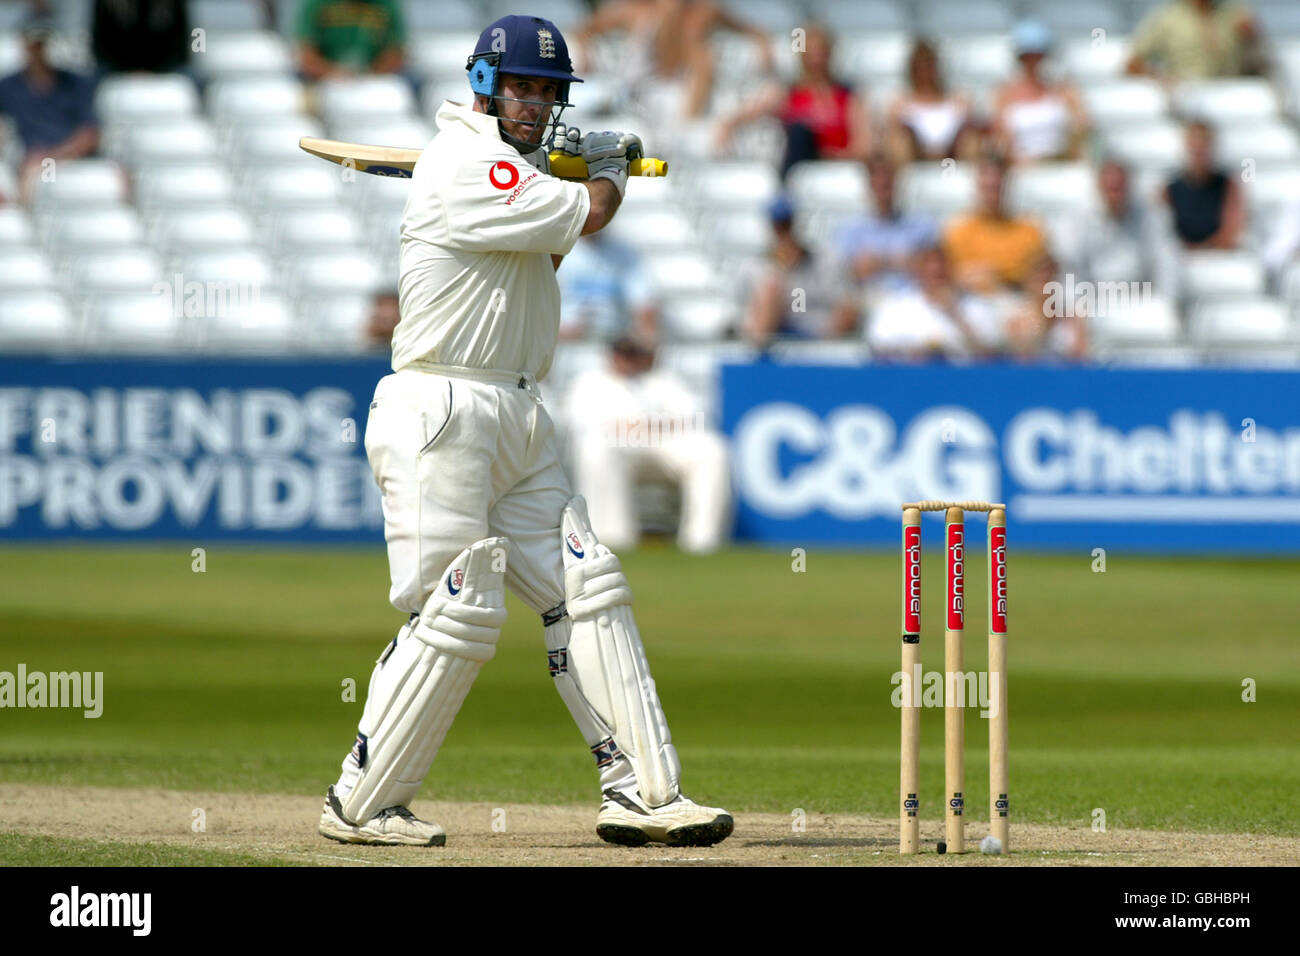 Cricket - npower Third Test - England v New Zealand - Day Four. England's Graham Thorpe watches a shot race towards the boundary Stock Photo